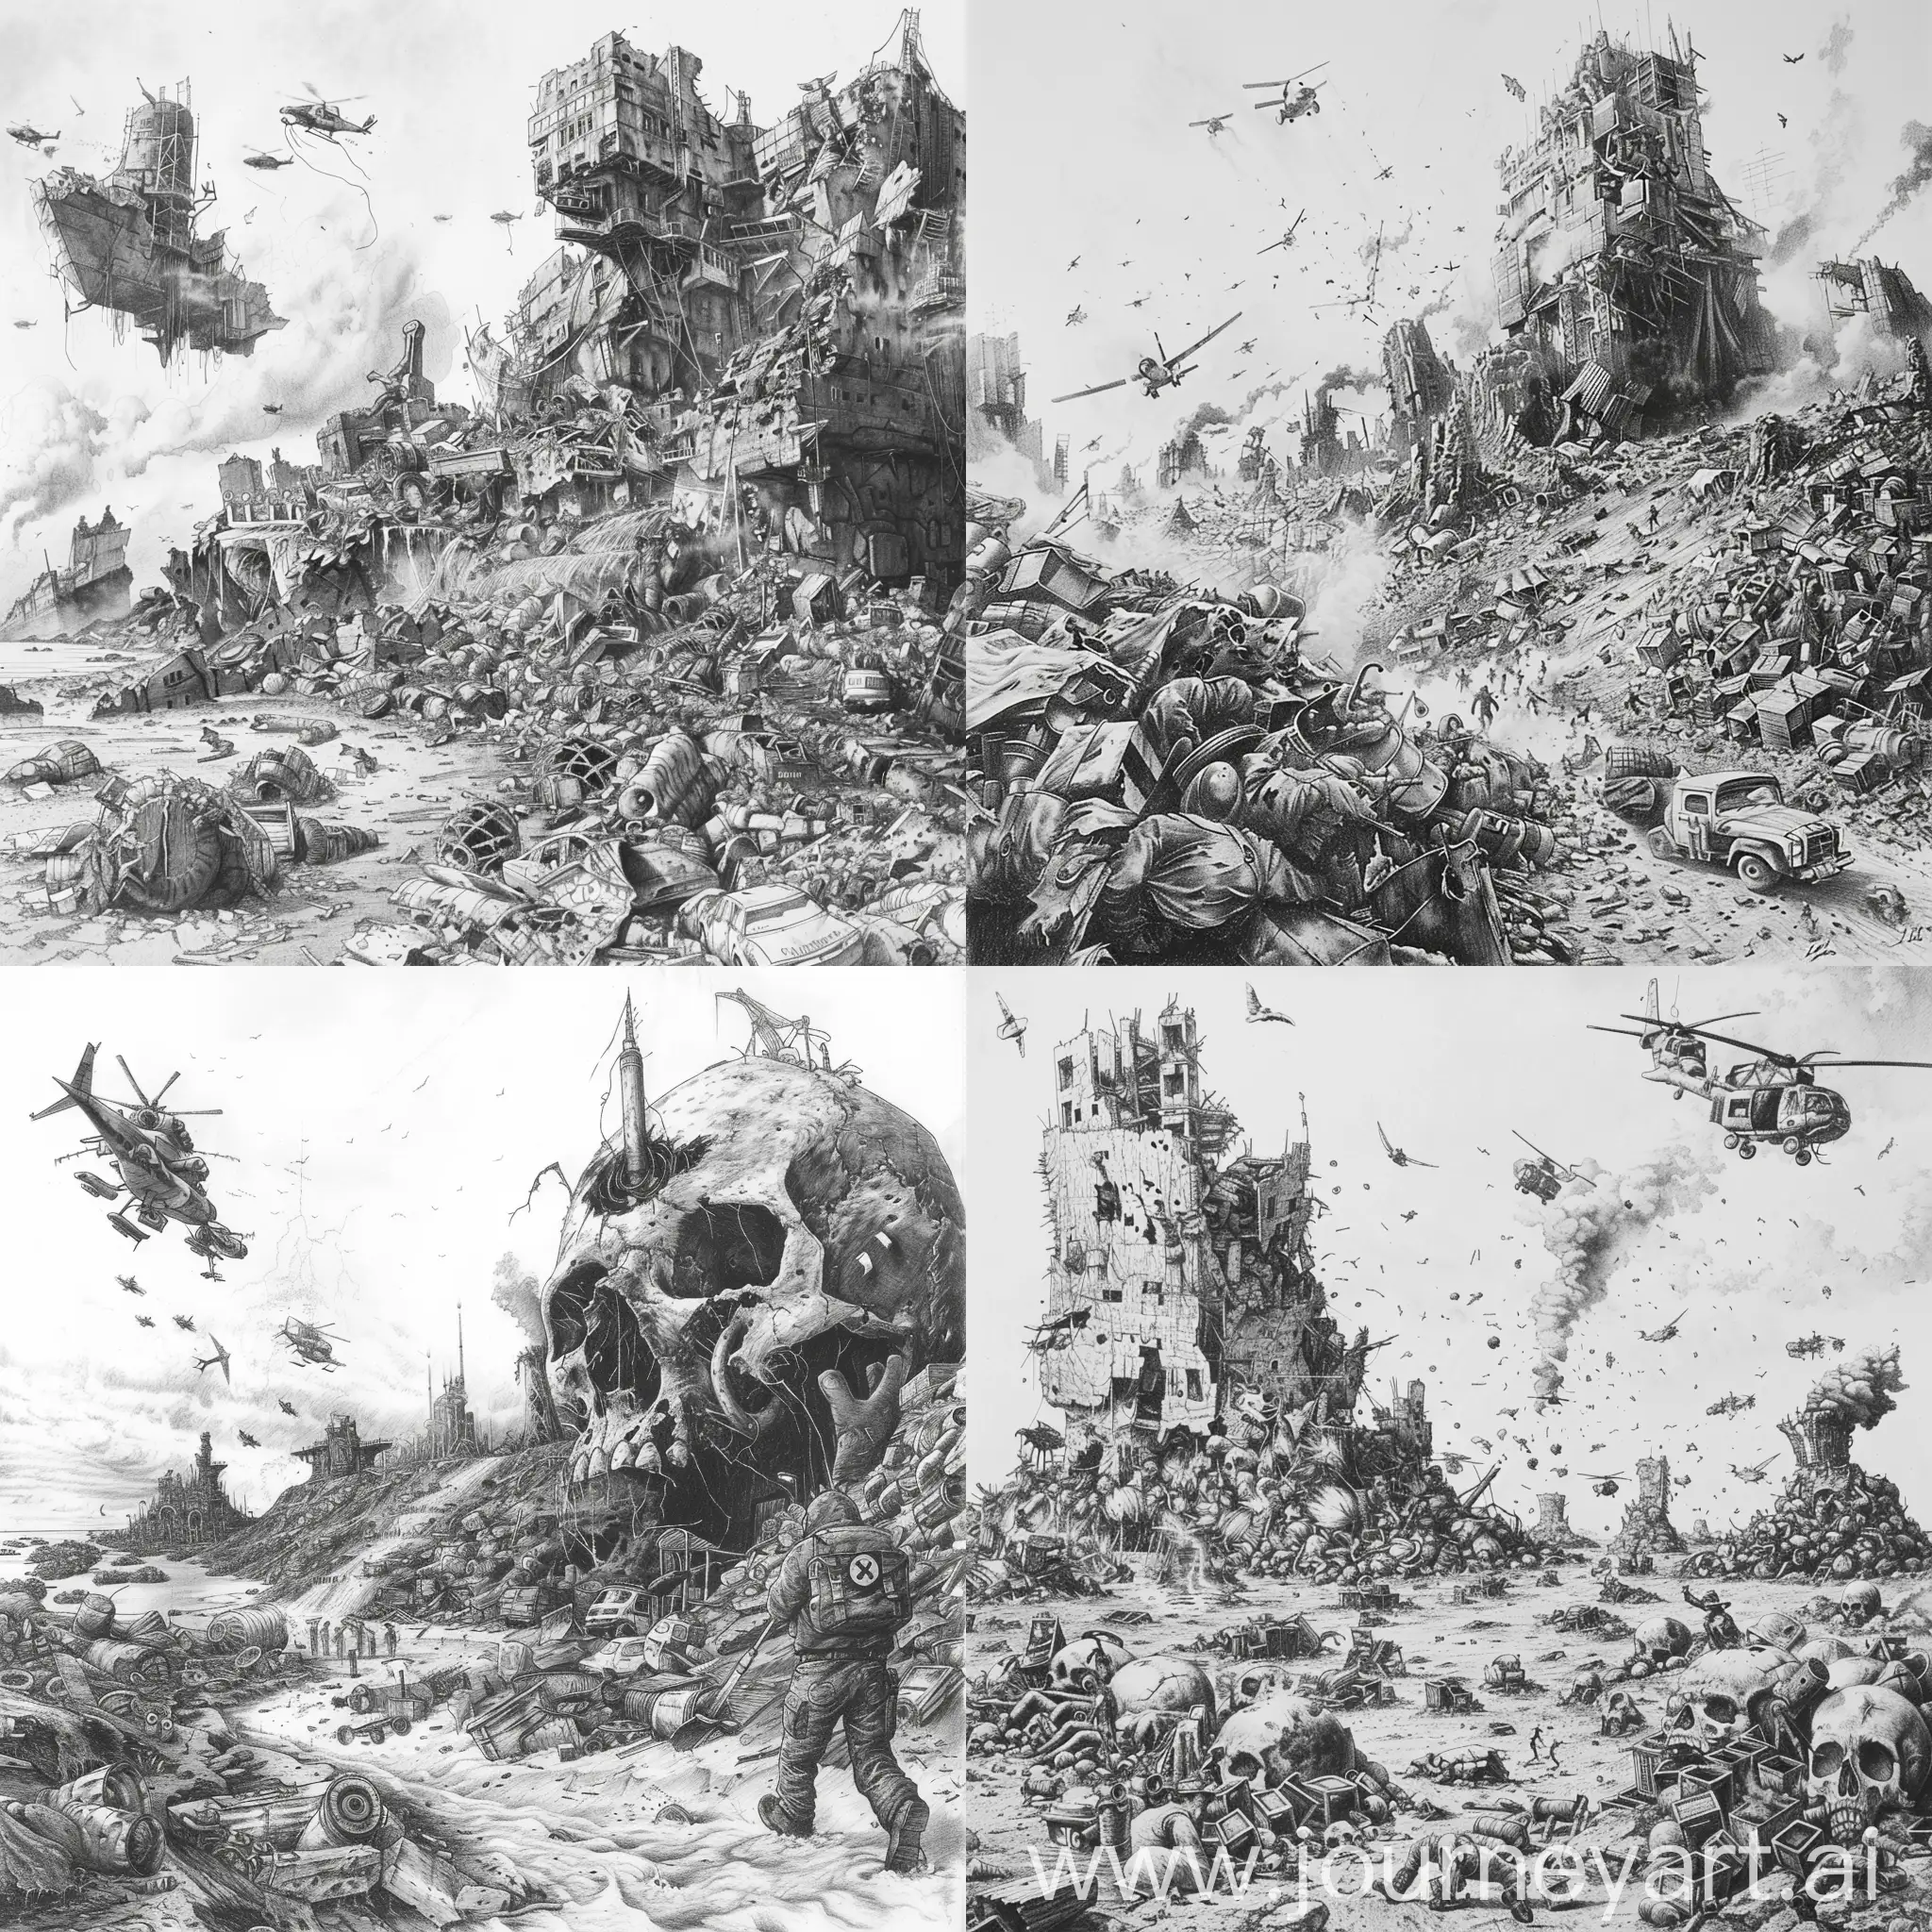 pencil drawing, black and white, post-apocalypse, big garbage island, Salvagepunk, human battle